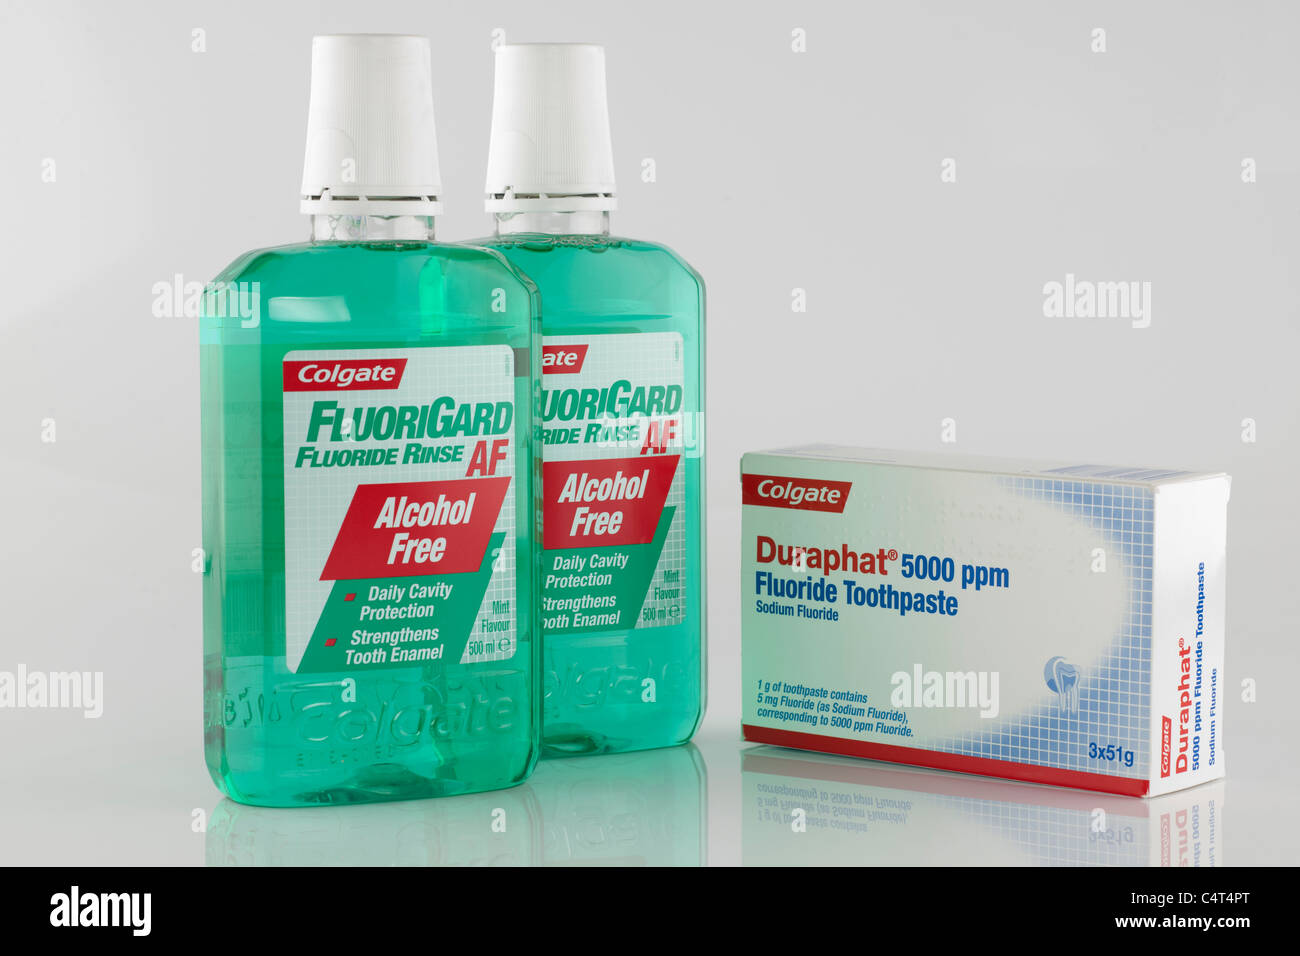 Dental hygiene Colgate Fluoriguard and Colgate Duraphat 5000 ppm fluoride toothpaste Stock Photo